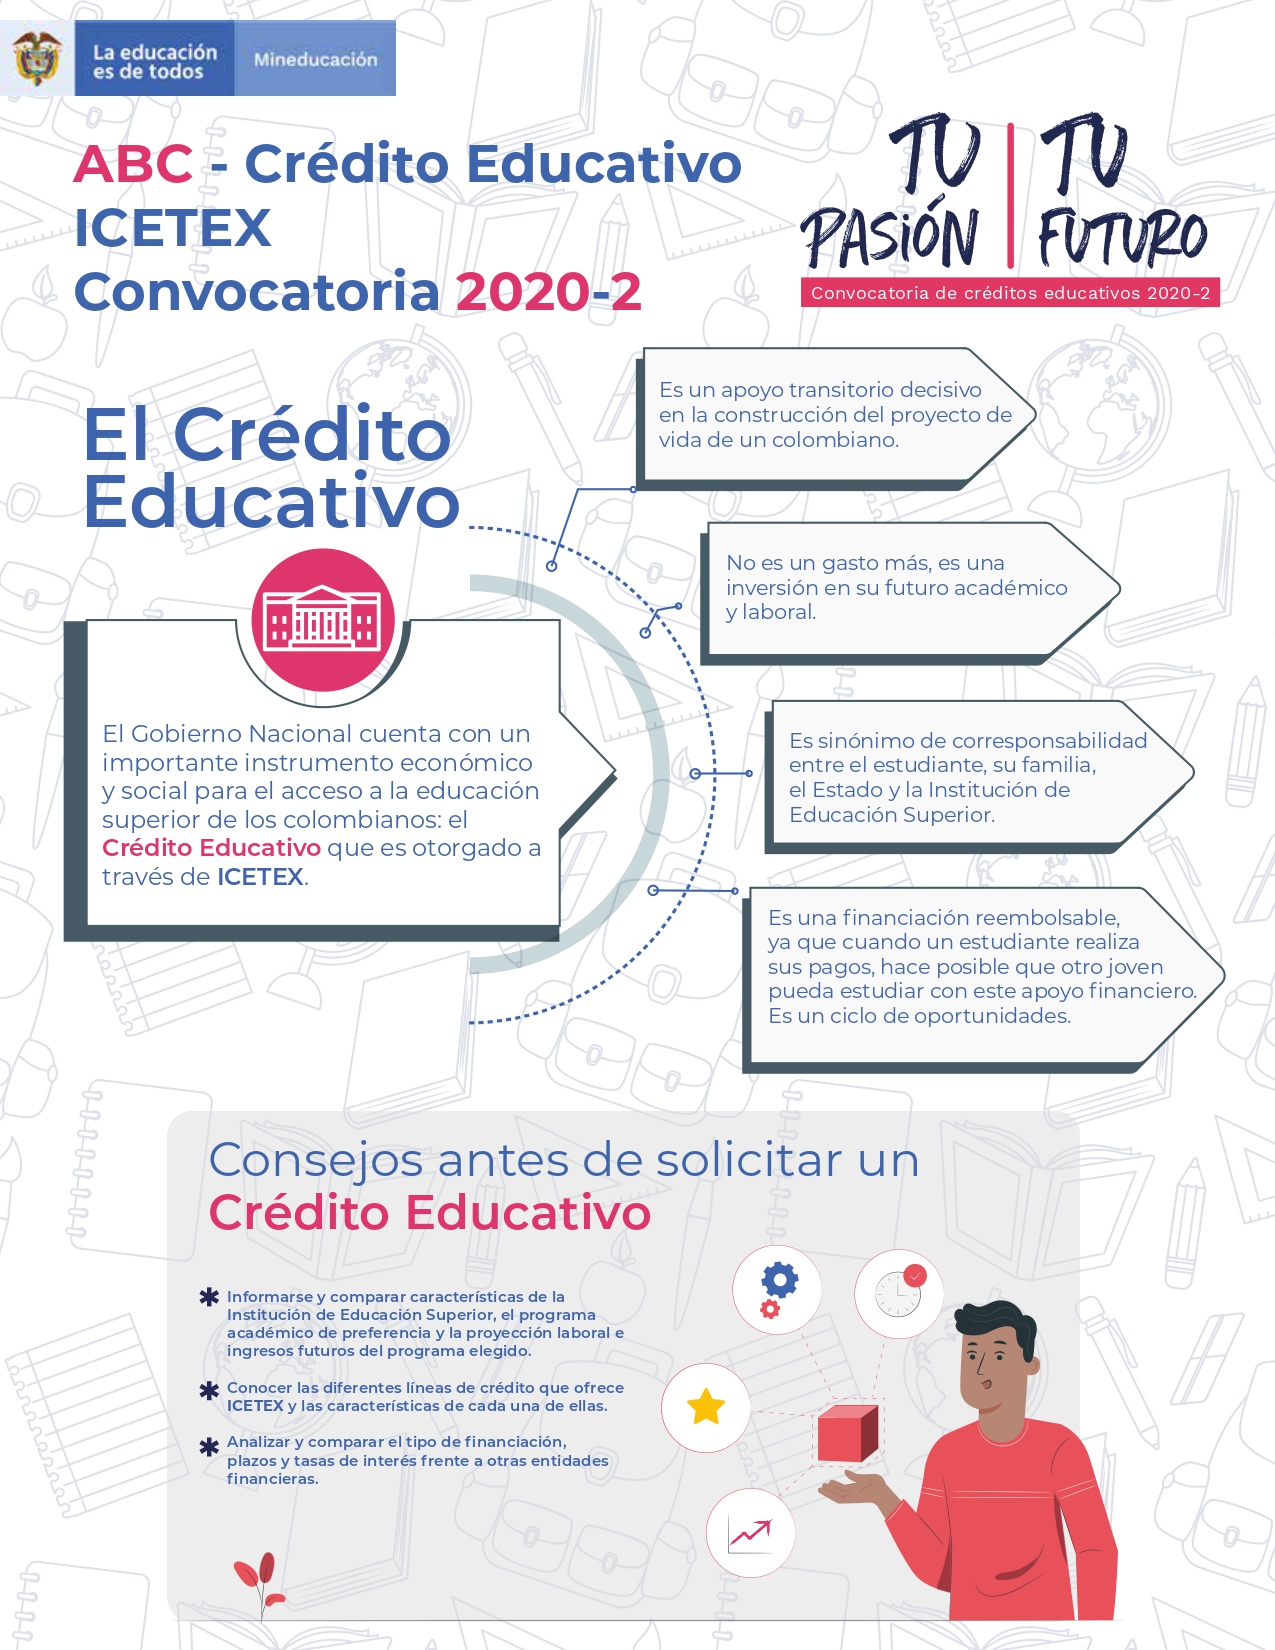 Crédito educativo ICETEX 2020-2